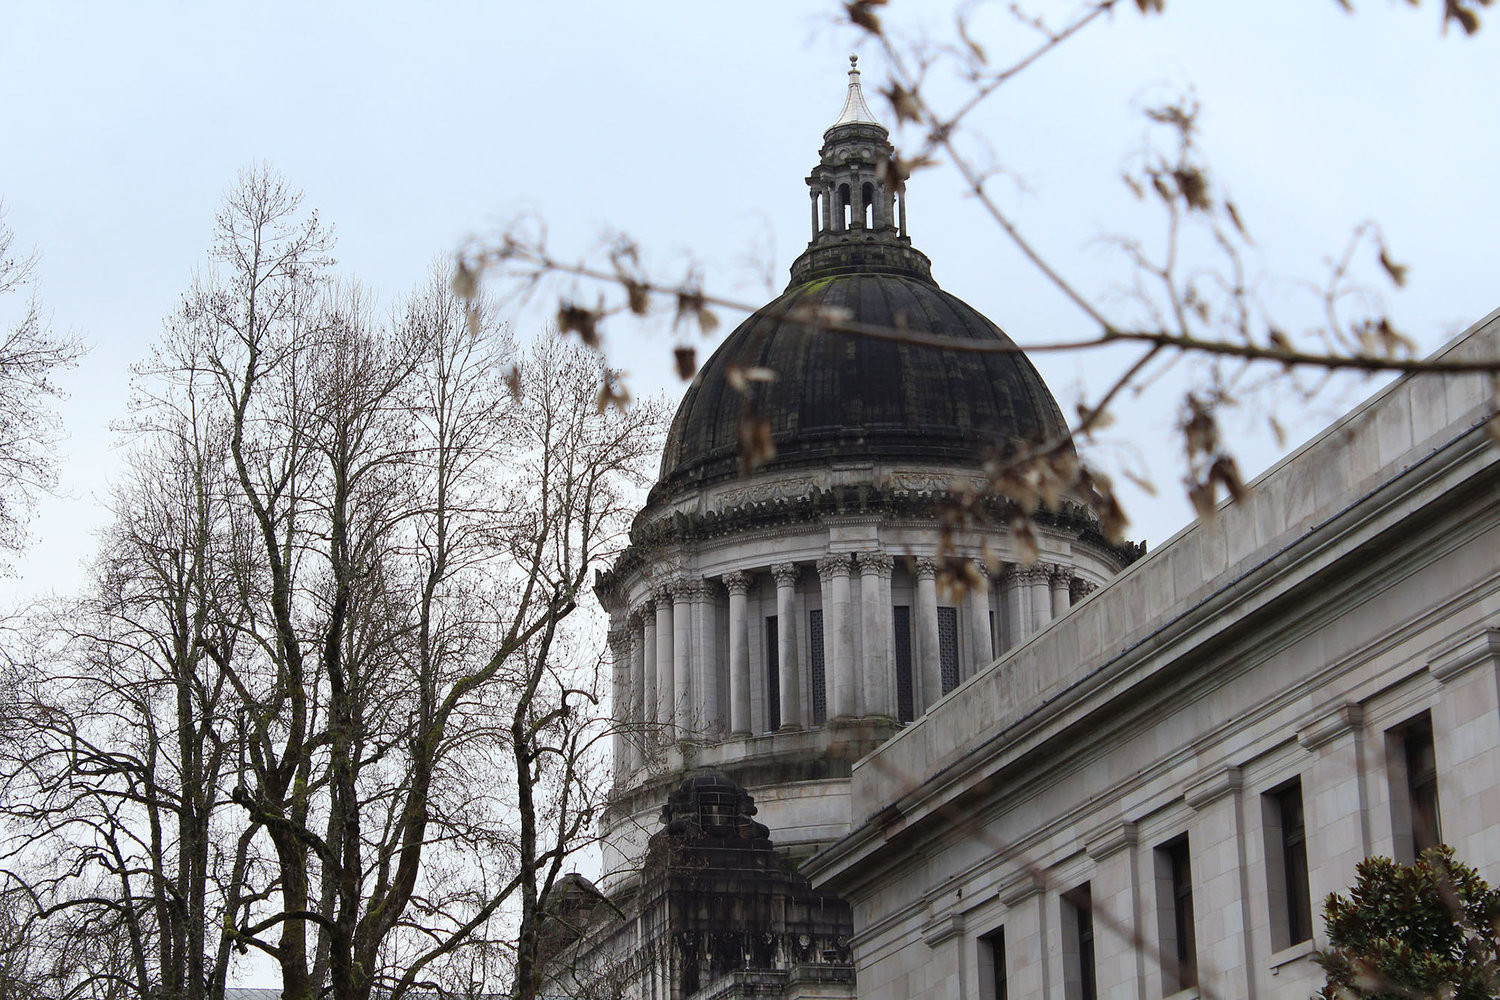 The Washington State Capitol.